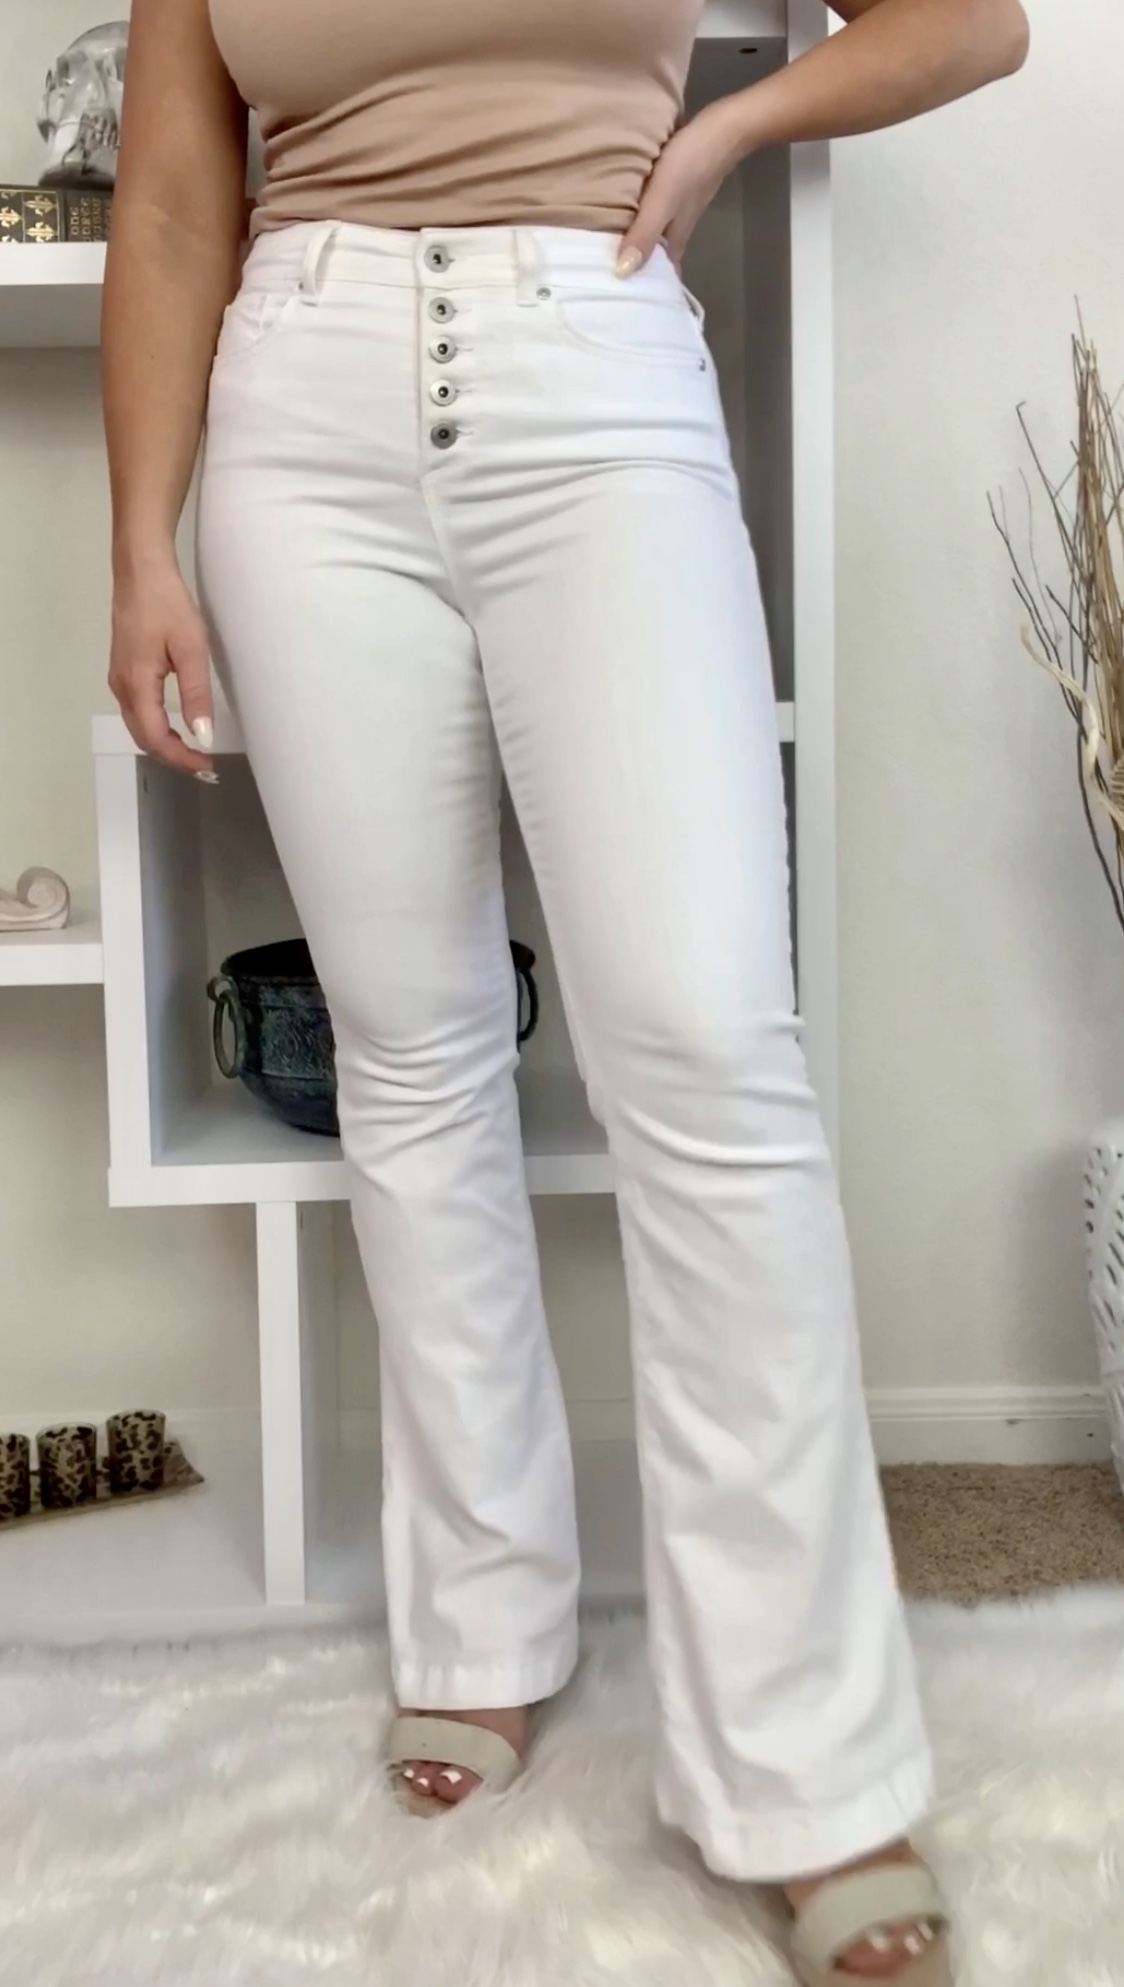 Sofia Vergara Jeans-Huge Try-on Walmart Haul